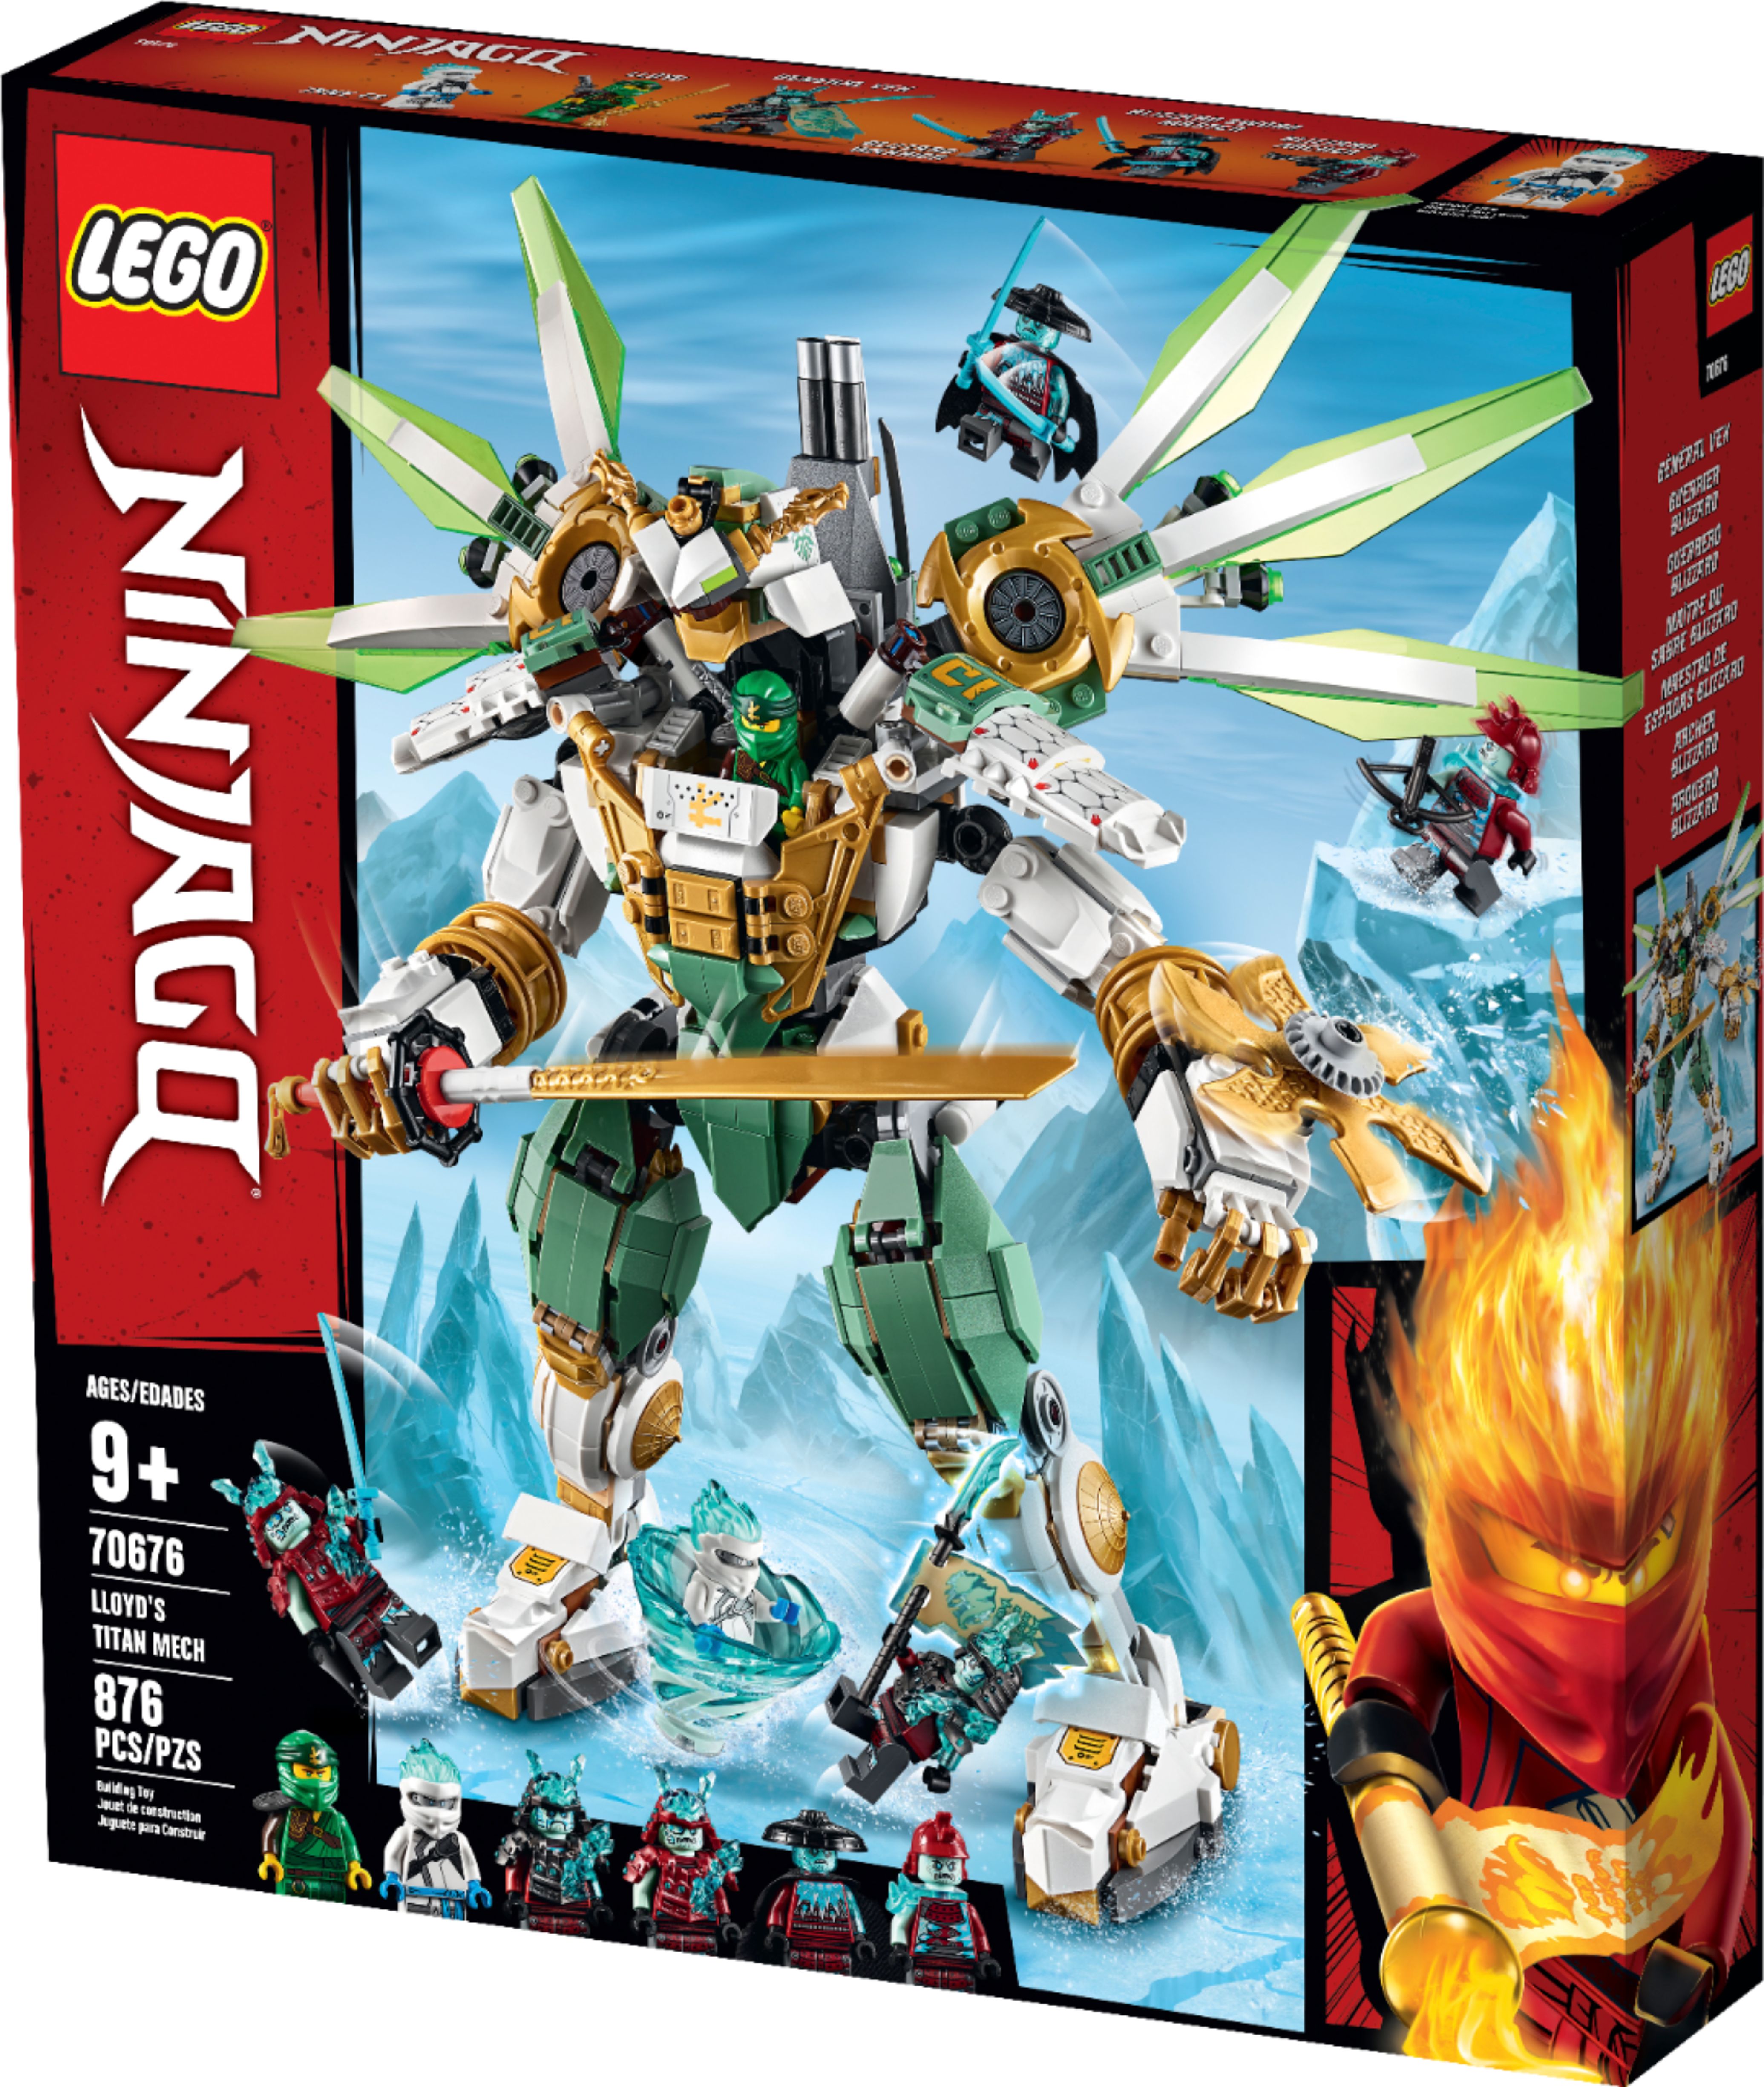 LEGO Ninjago Lloyd's Titan Mech 70676 6250931 - Best Buy